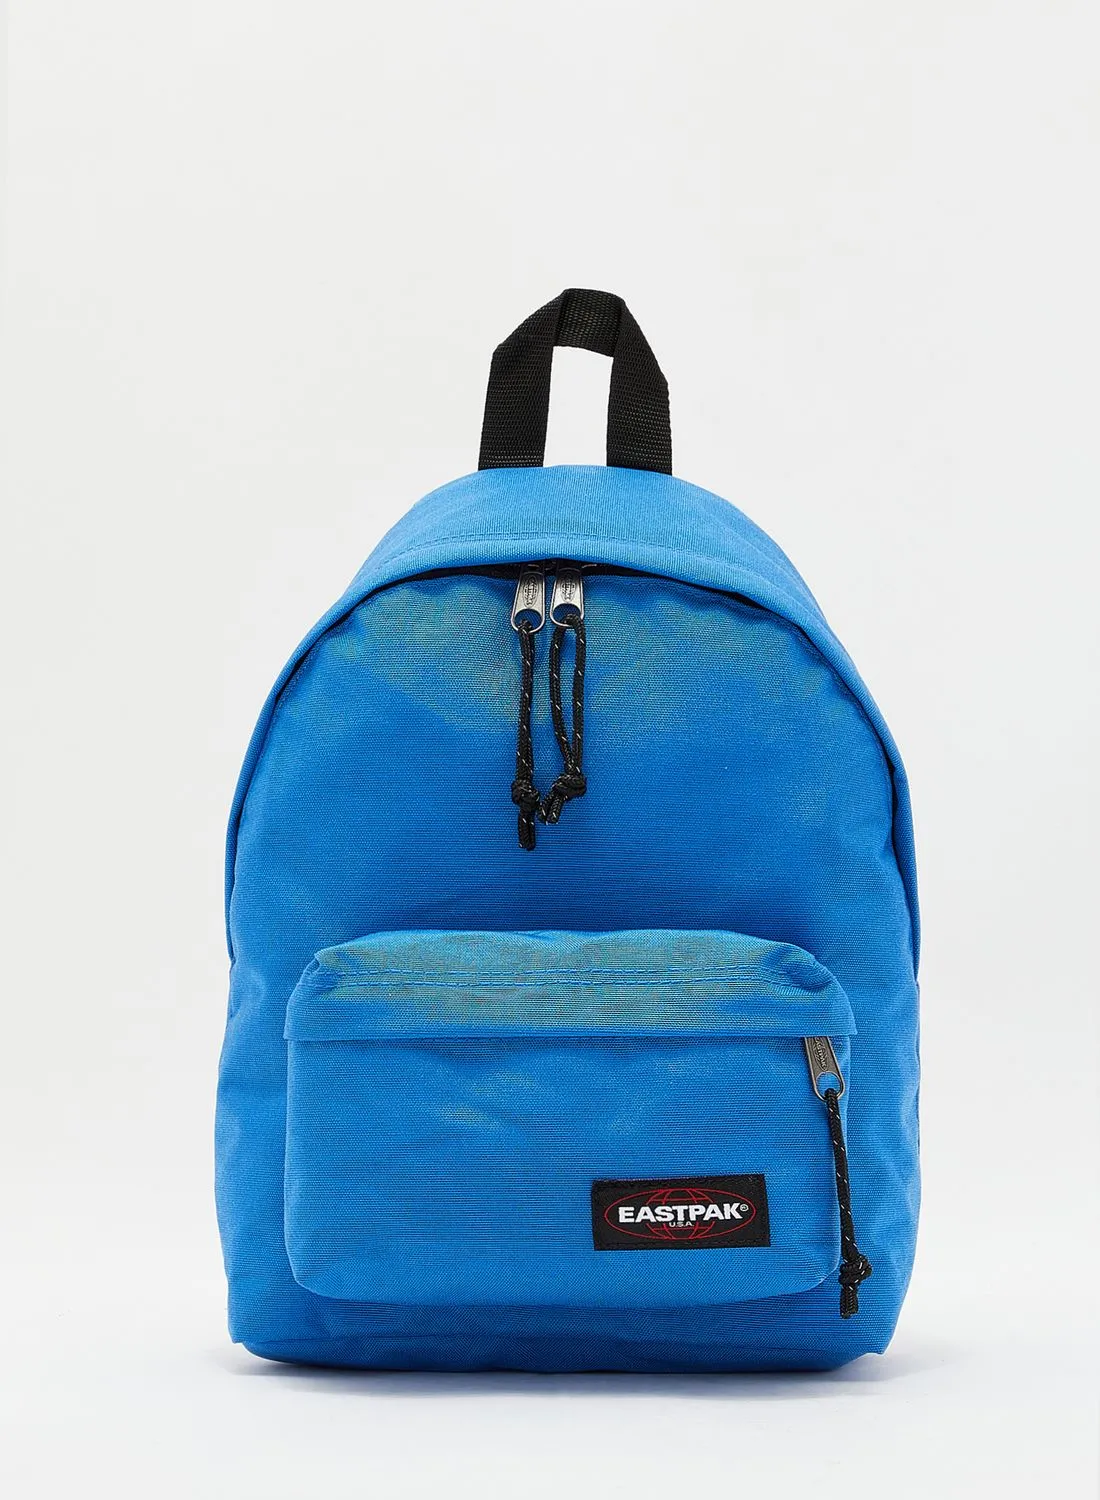 EASTPAK Orbit Backpack